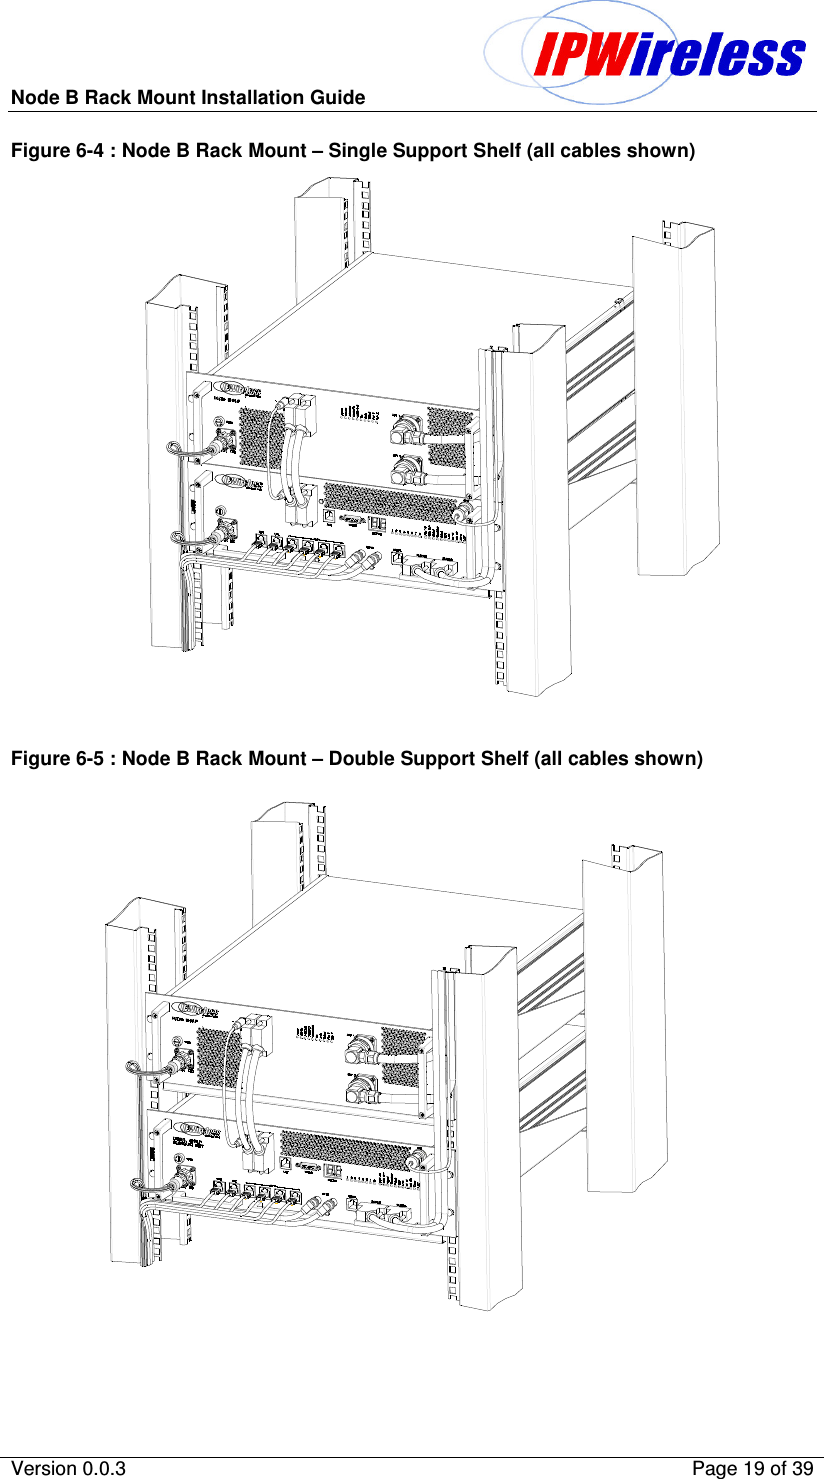 Node B Rack Mount Installation Guide                          Version 0.0.3    Page 19 of 39  Figure 6-4 : Node B Rack Mount – Single Support Shelf (all cables shown)                           Figure 6-5 : Node B Rack Mount – Double Support Shelf (all cables shown)    